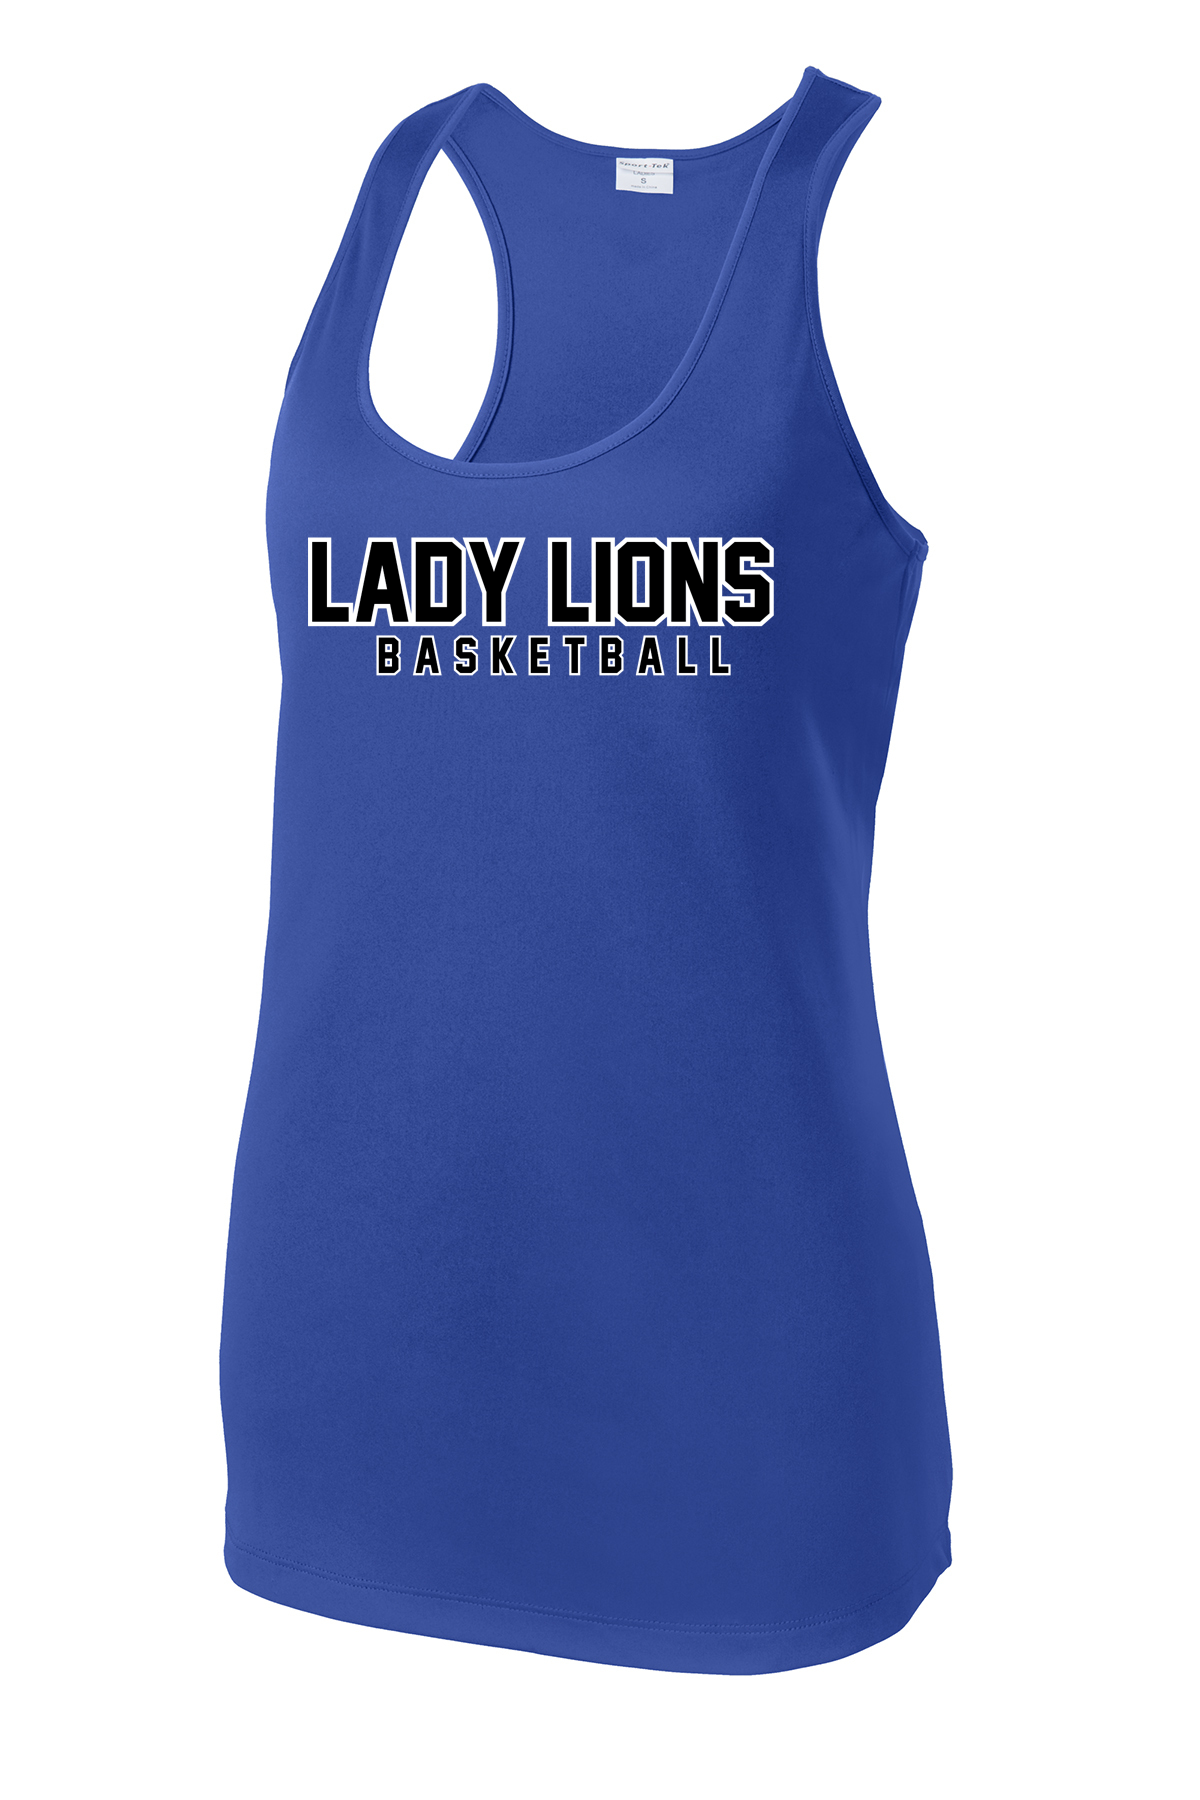 Lady Lions Basketball Women's Racerback Tank